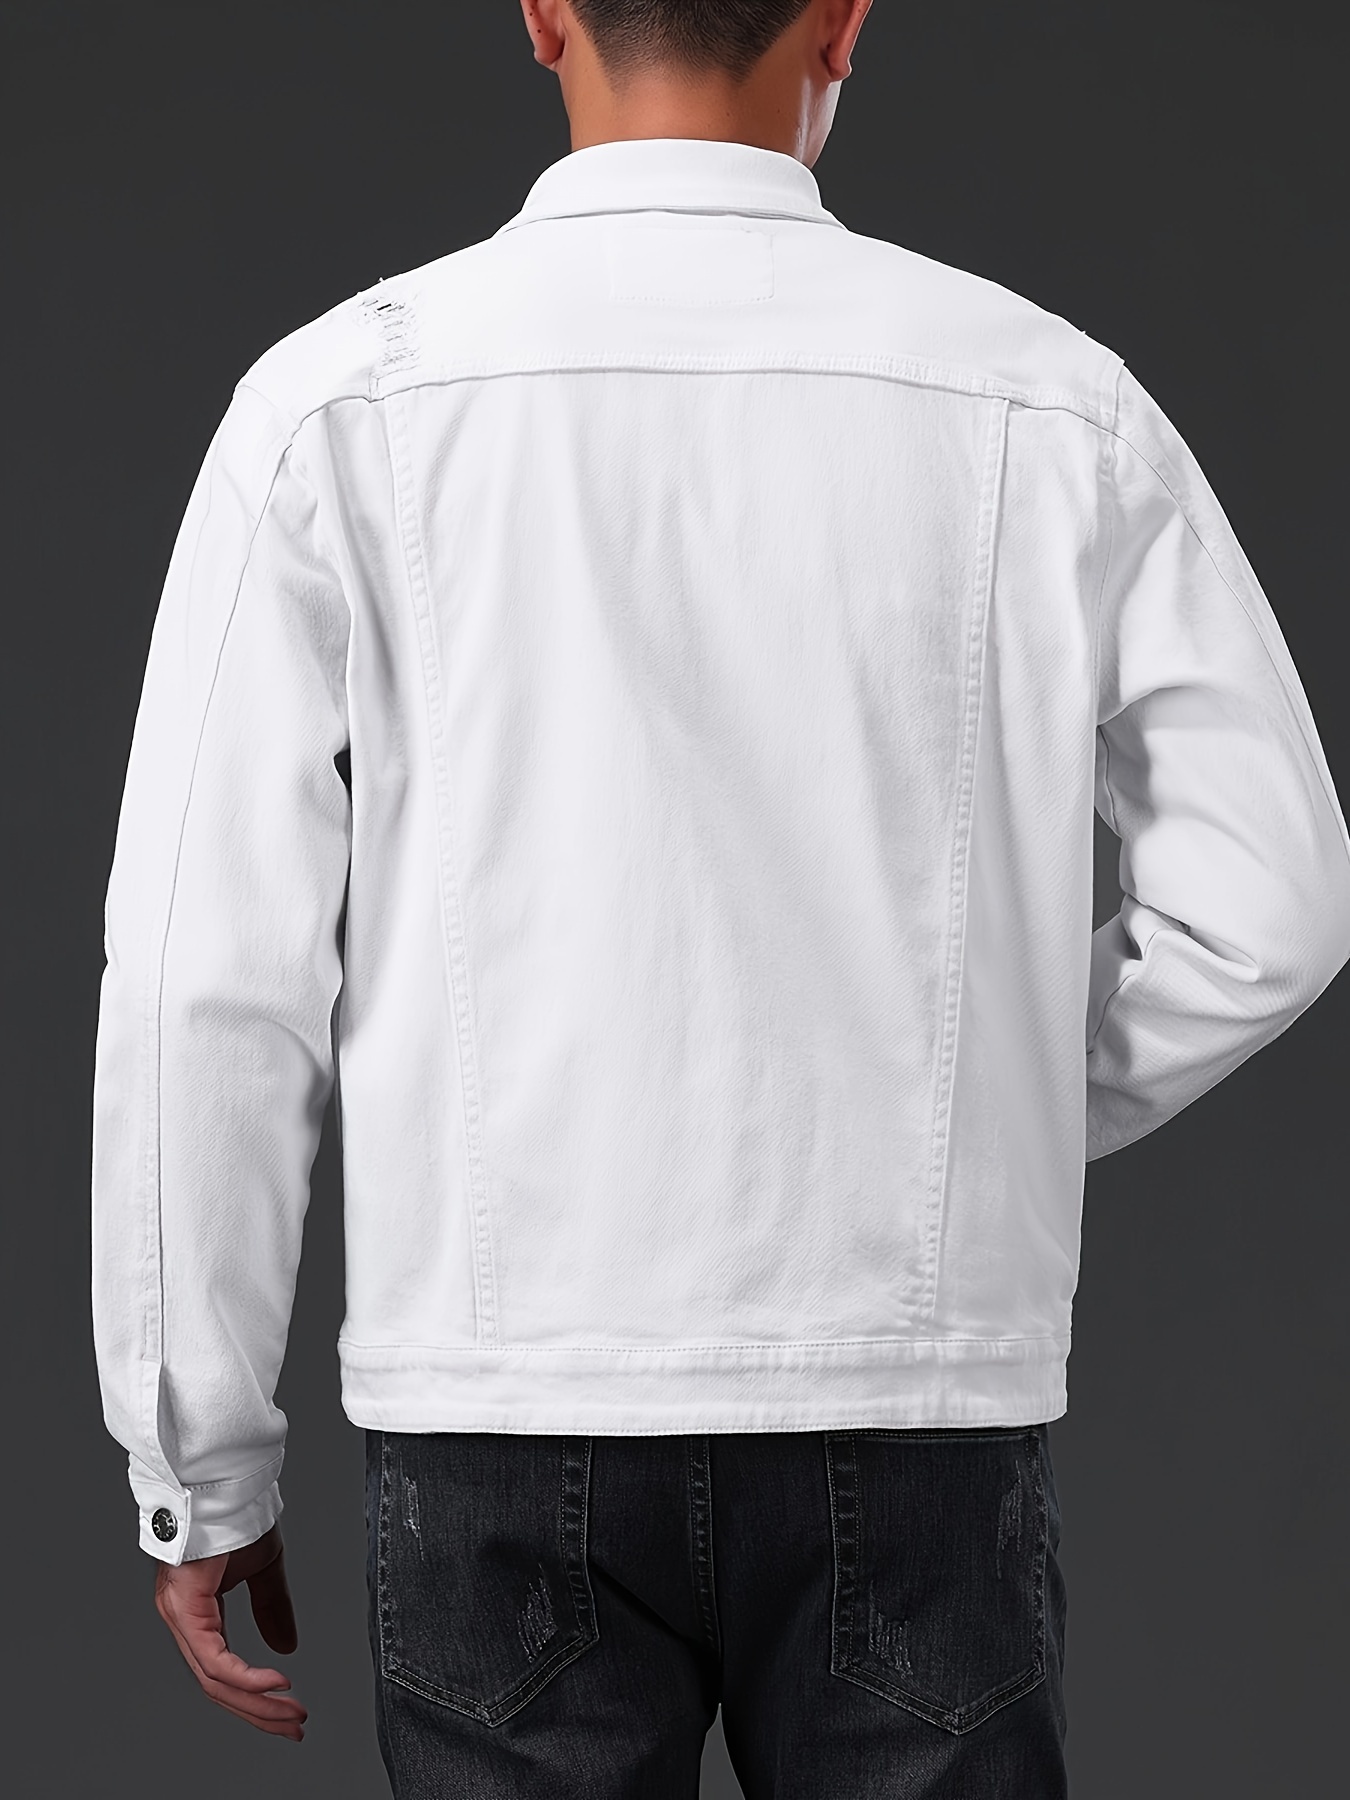 mens casual denim jacket street style button up flap pocket jacket details 7